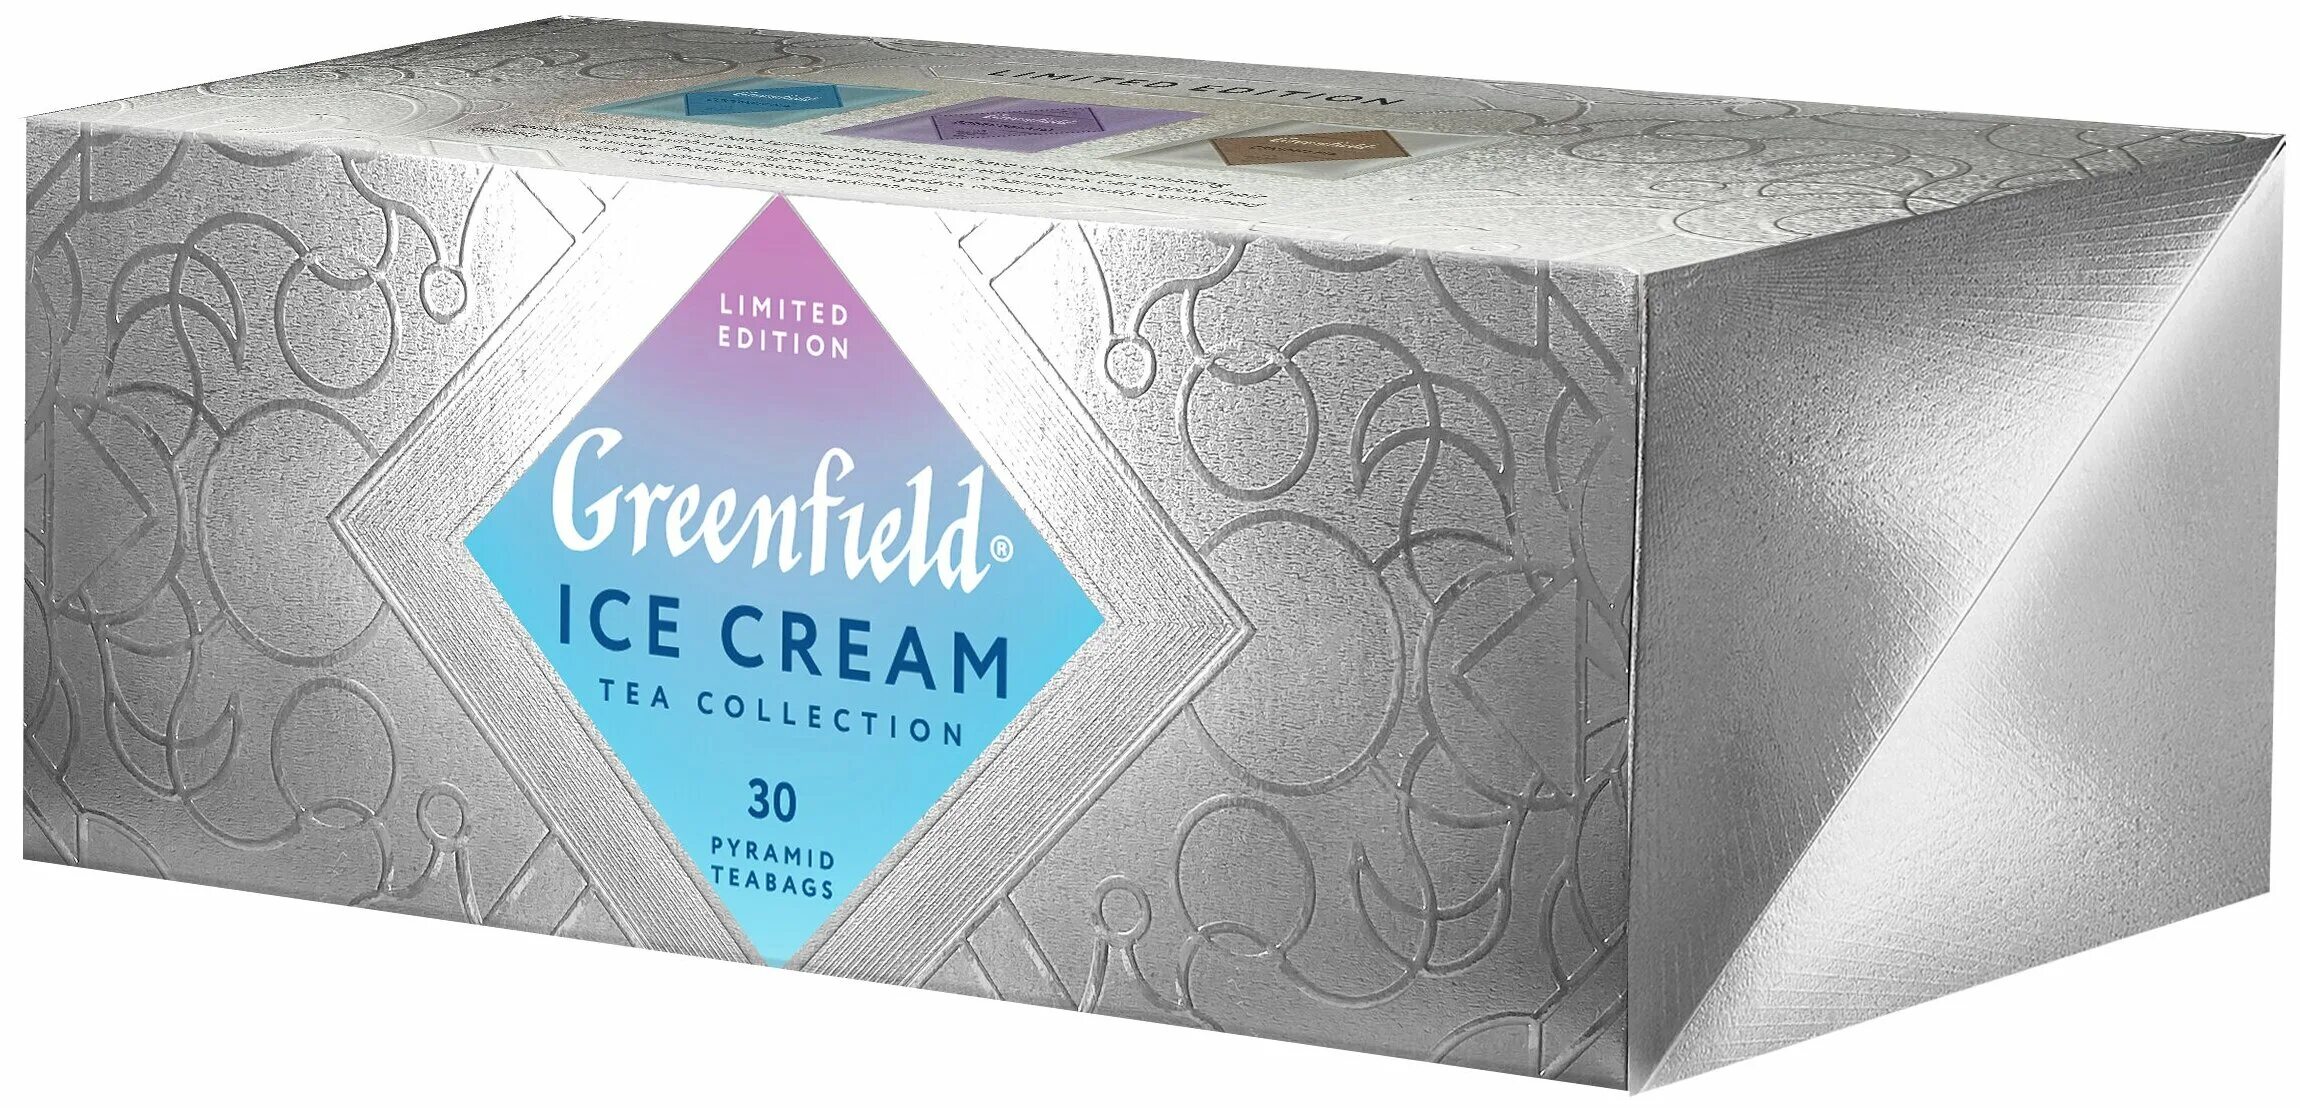 Чай мороженое купить. Чай черный Greenfield Limited Edition Ice Cream. Гринфилд Ice Cream набор. Гринфилд Limited Edition. Чай Гринфилд Coconut Ice.